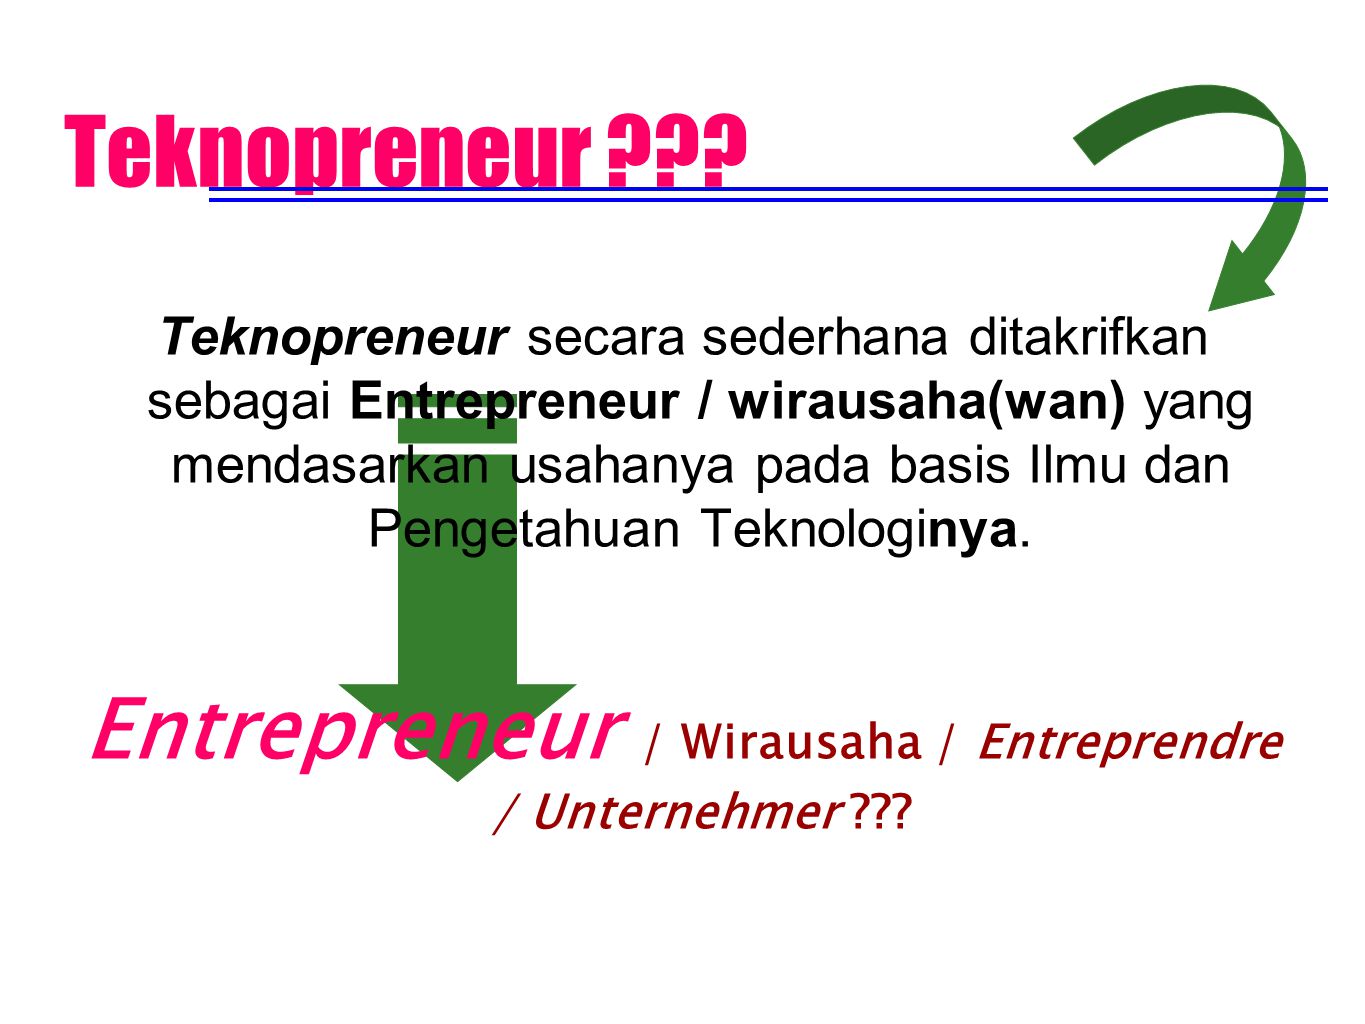 Entrepreneur / Wirausaha / Entreprendre / Unternehmer